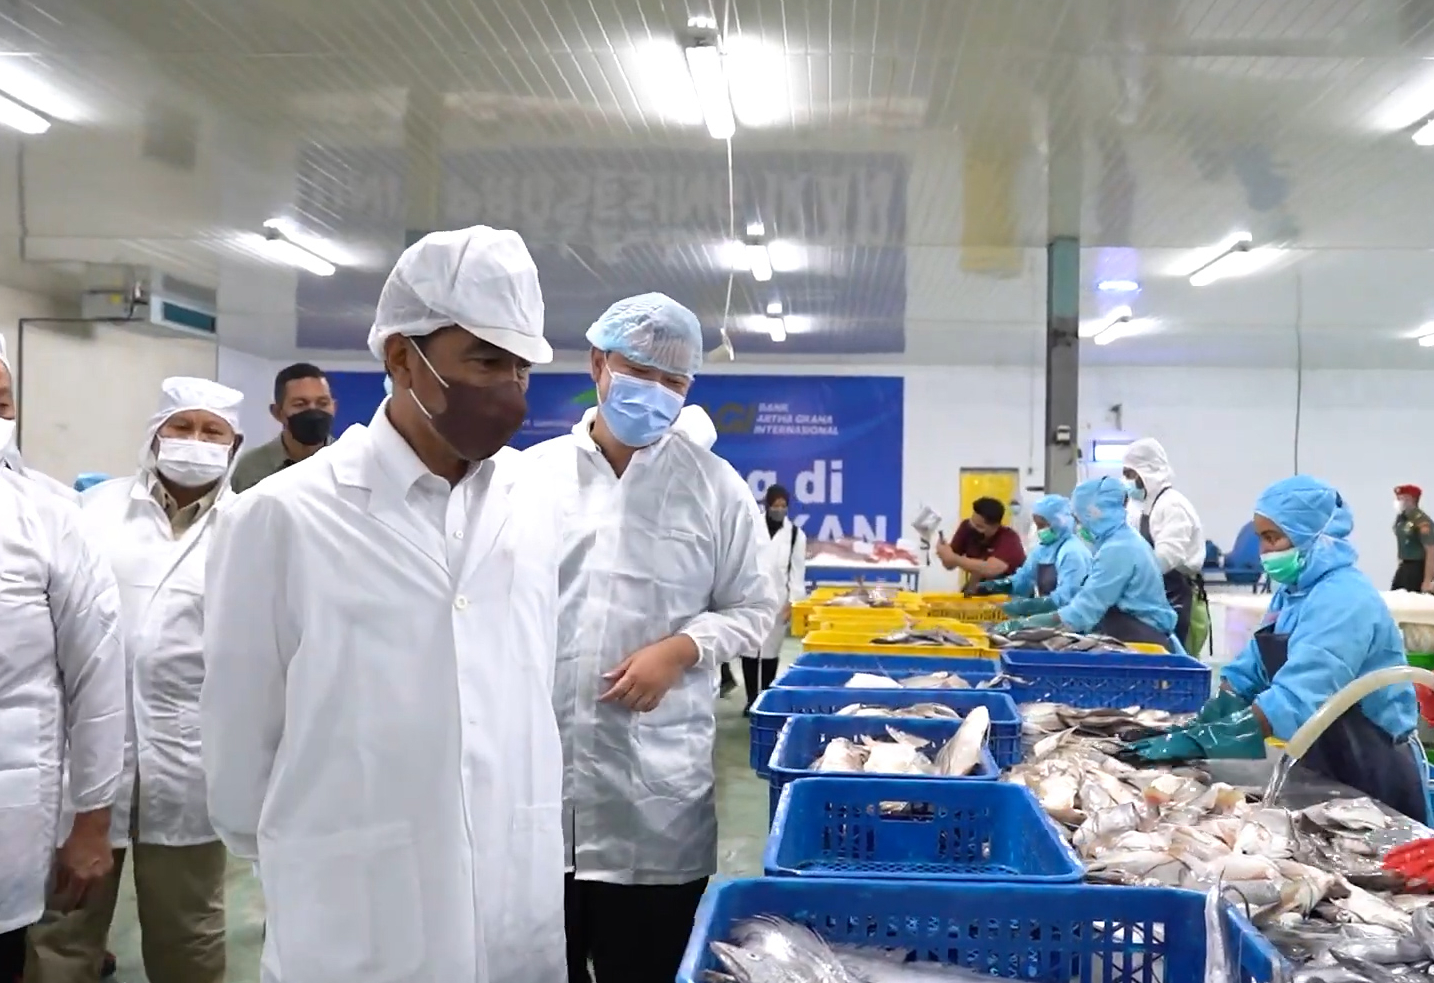 Presiden Joko Widodo dan Ibu Iriana Joko Widodo meninjau unit pengolahan ikan di PT Samudera Indo Sejahtera, Kota Tual, Rabu, 14 September 2022.

(Foto: Istimewa)